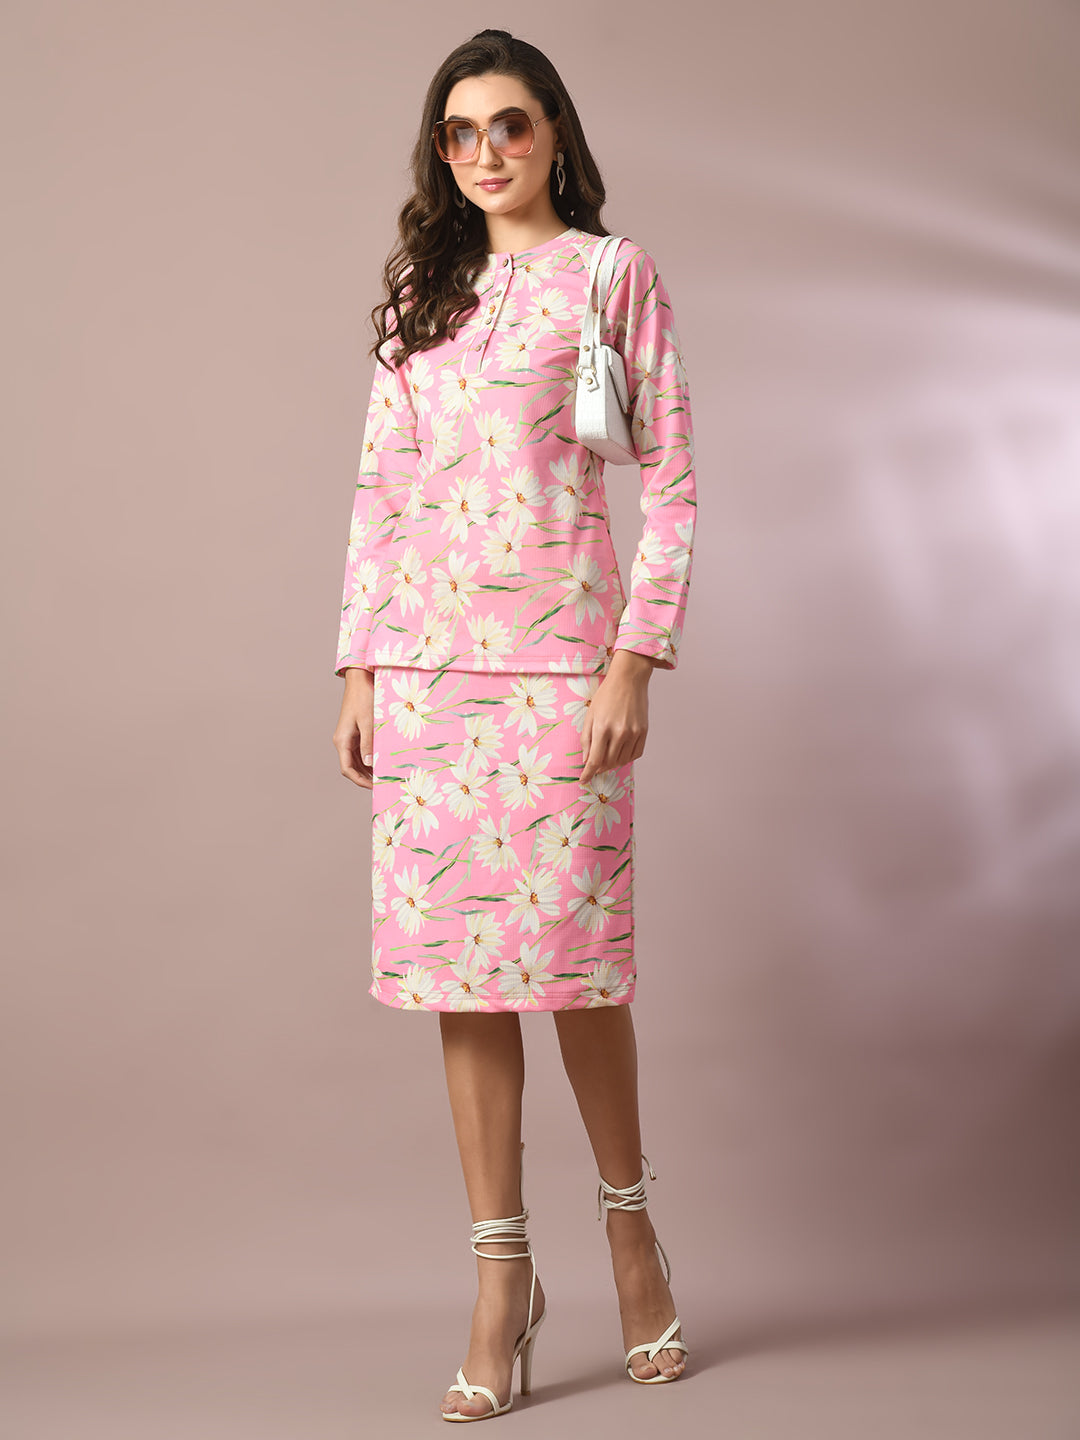 Women's  Pink Printed Knee Length Party Embellished Skirts   - Myshka